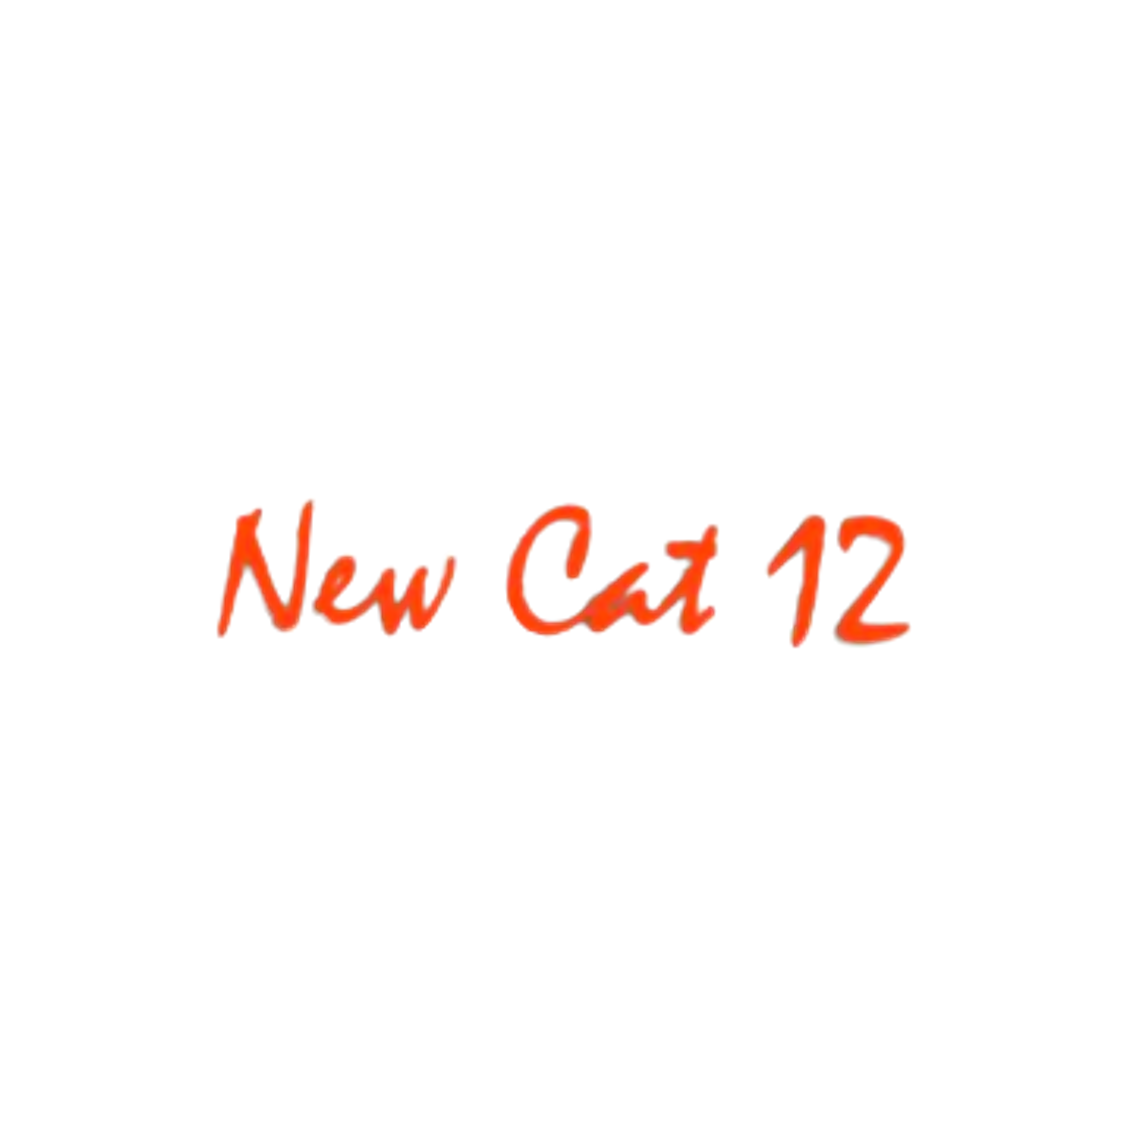 New cat 12 racing